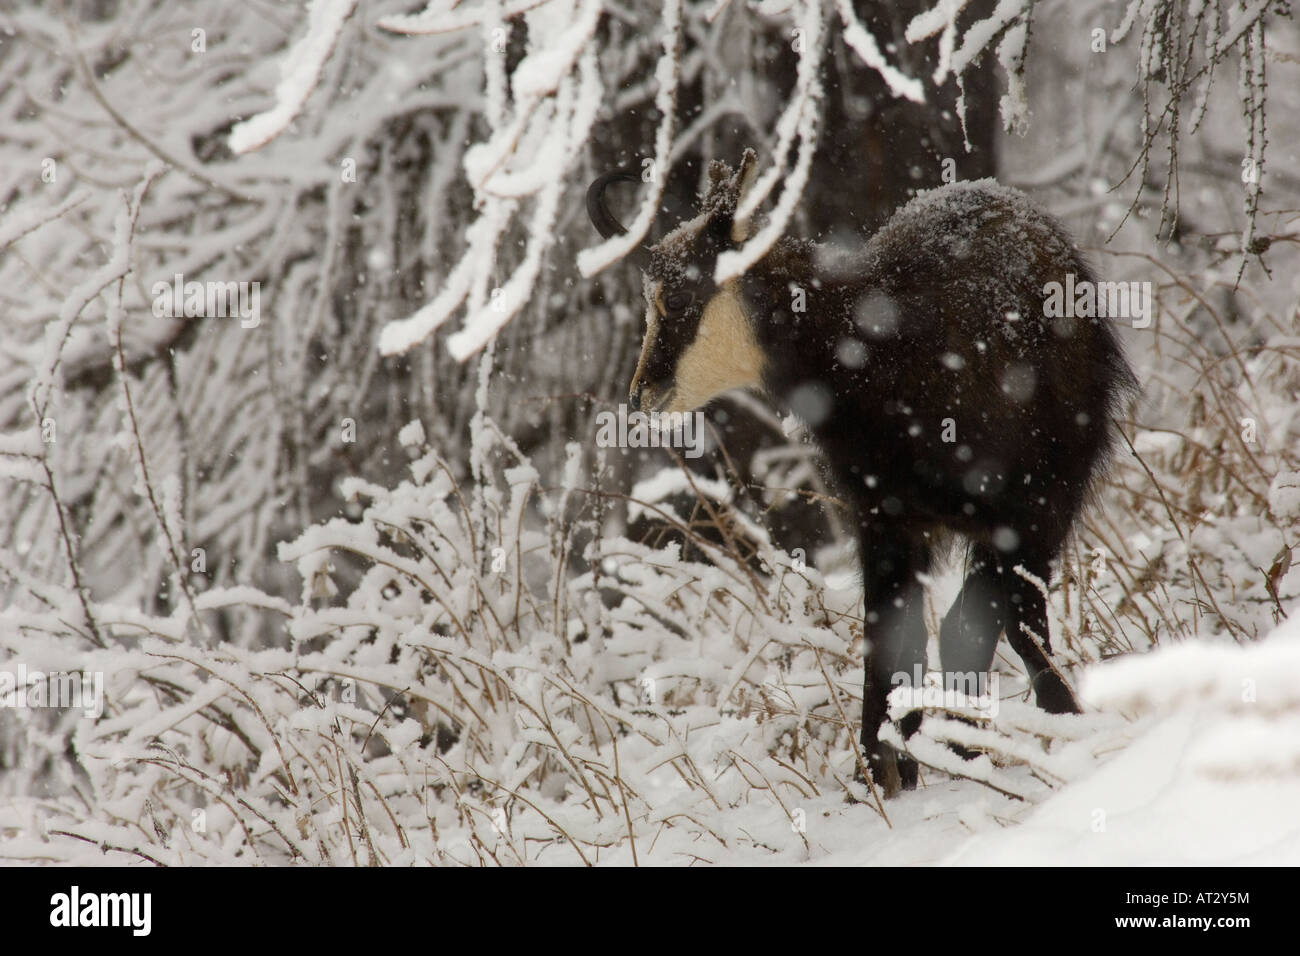 chamois mammals snow mountain Rupicapra rupicapra mammiferi  neve nevicata montagna paesaggio inverno Valnoney Cogne Stock Photo